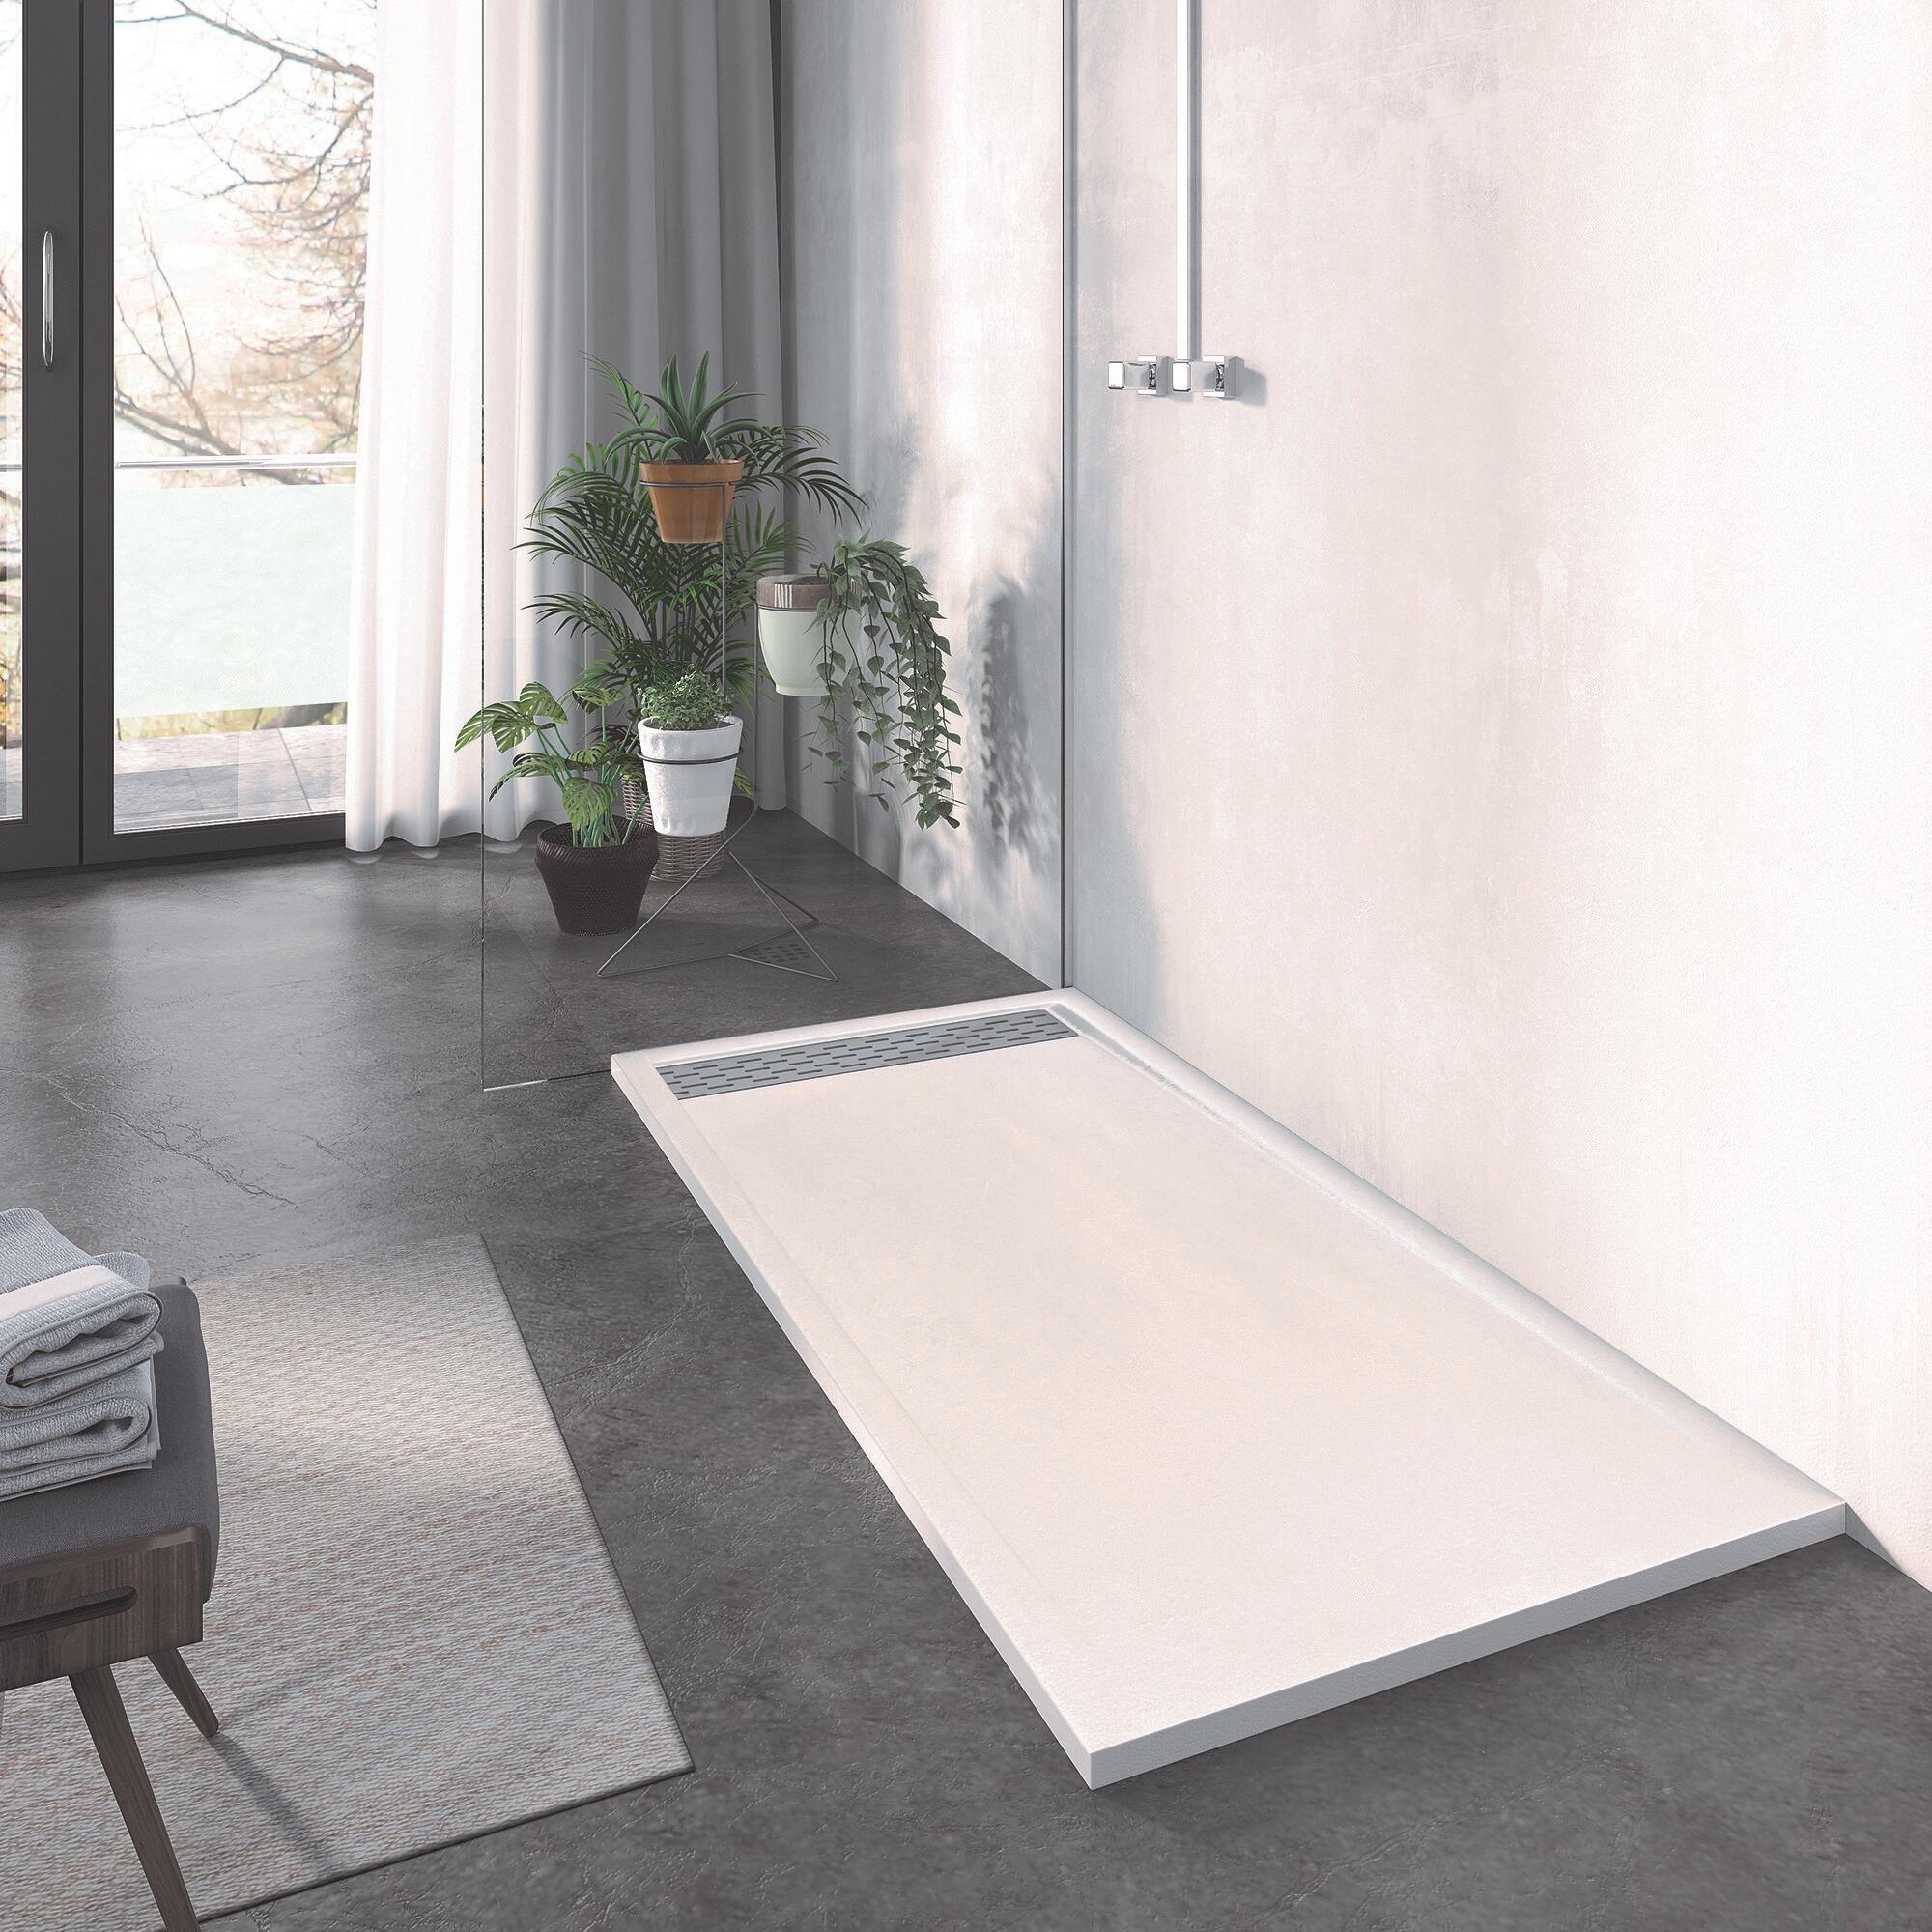 Plato de ducha rectangular - 120 x 80 cm y sistema de desagüe